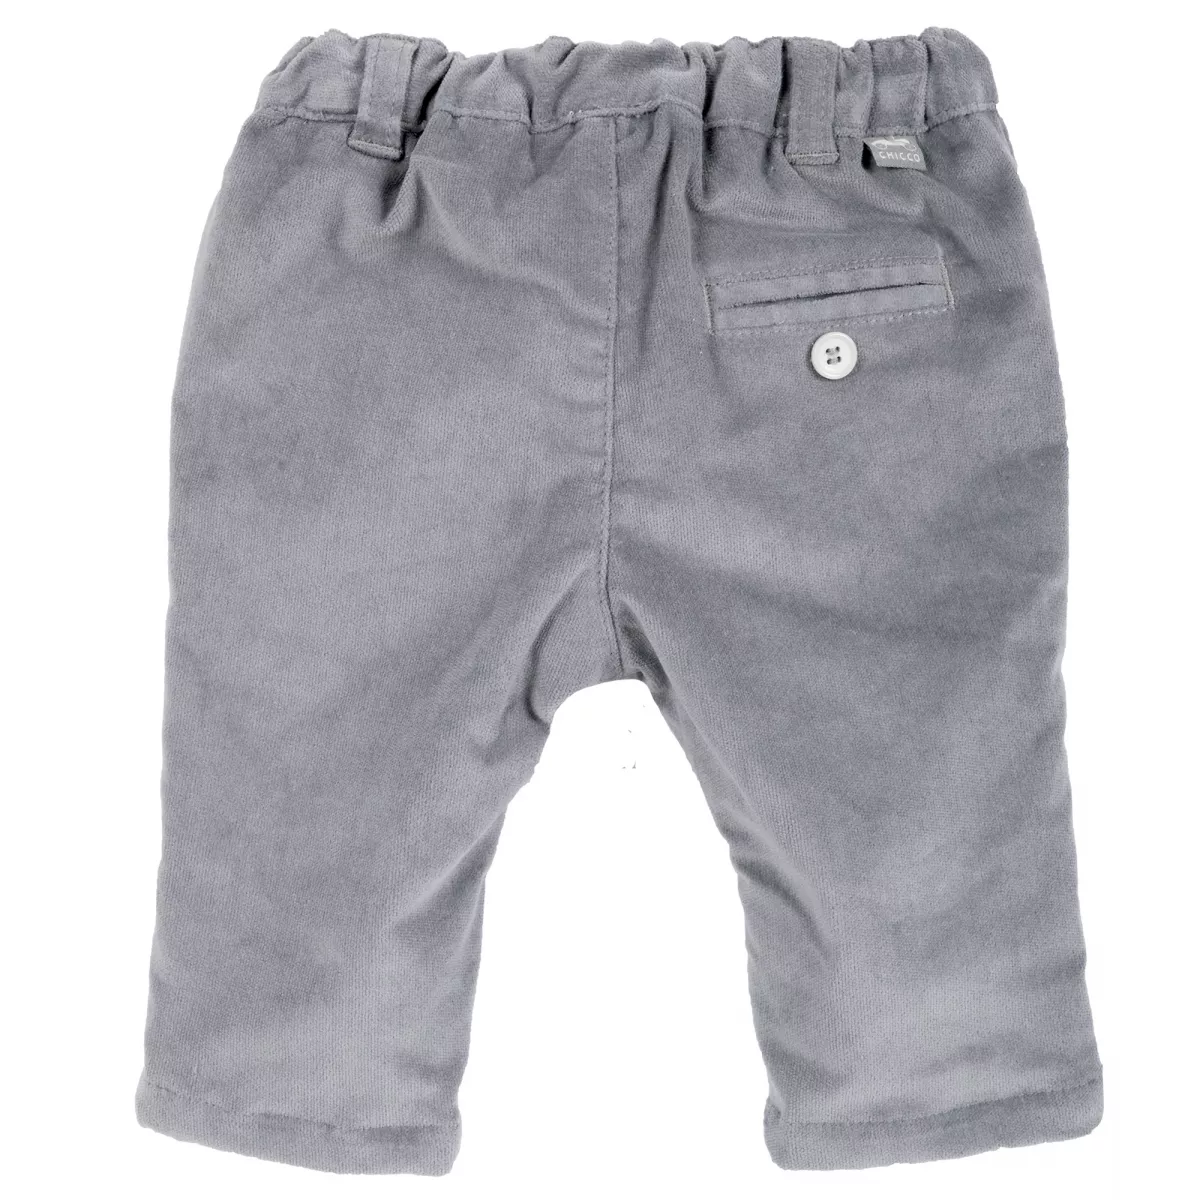 Pantalon copii Chicco, gri inchis, 56